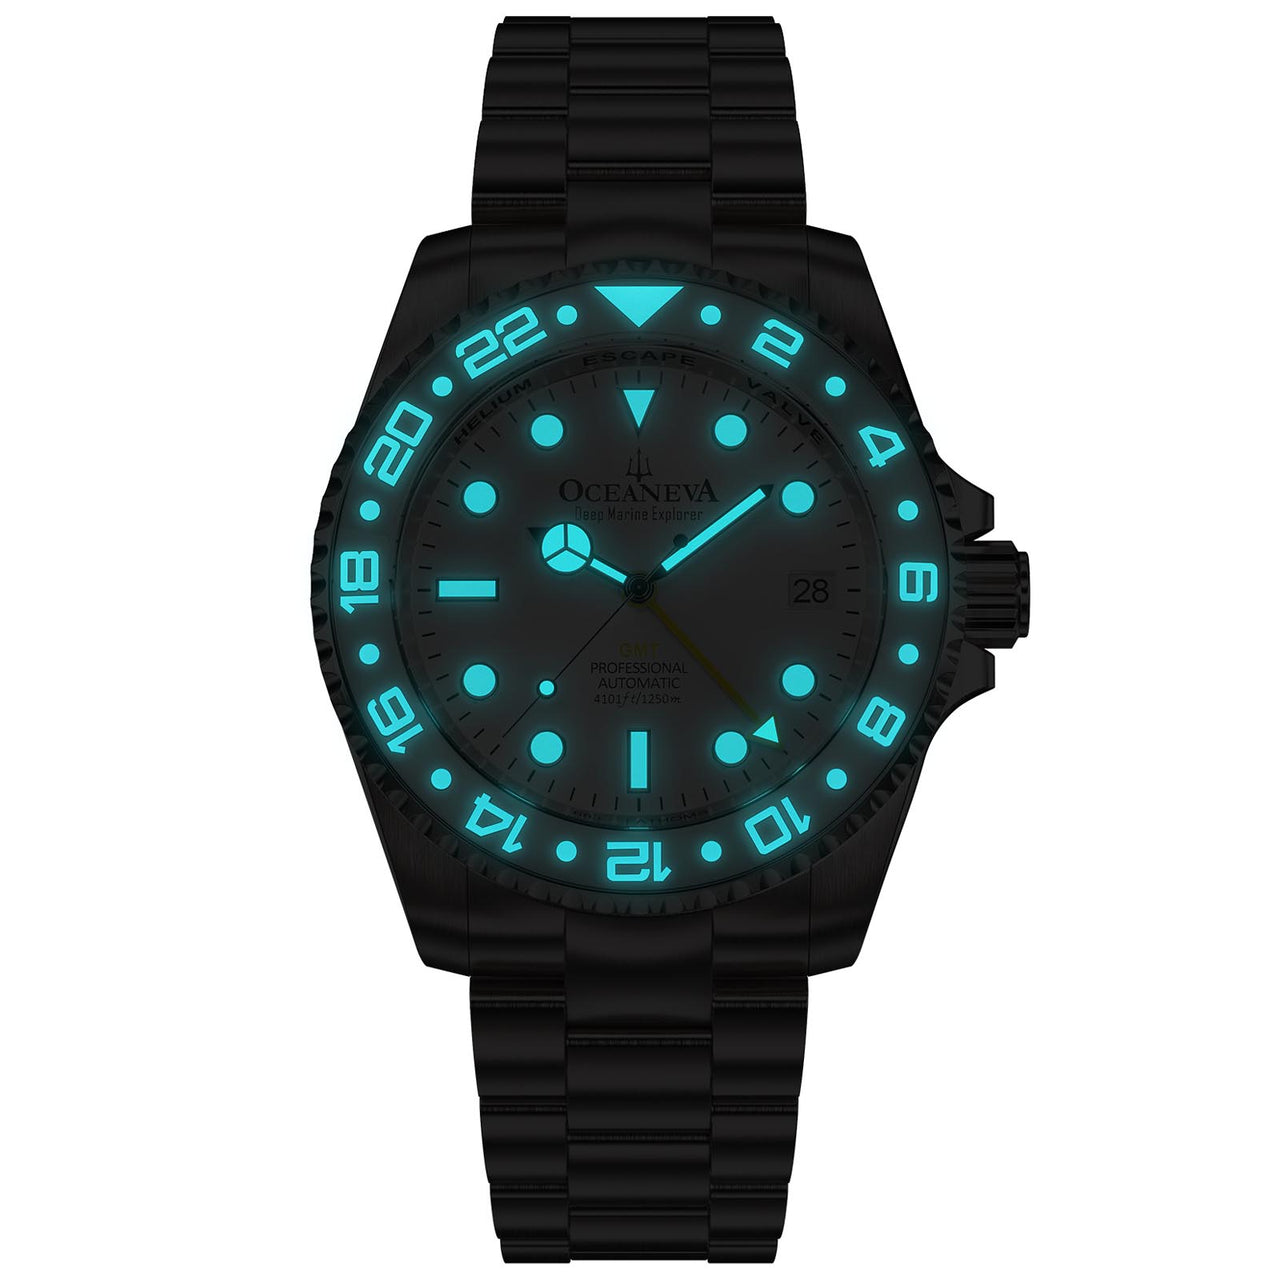 Exclusive Oceaneva Titanium Watch with Enhanced BGW9 Grade A Luminous